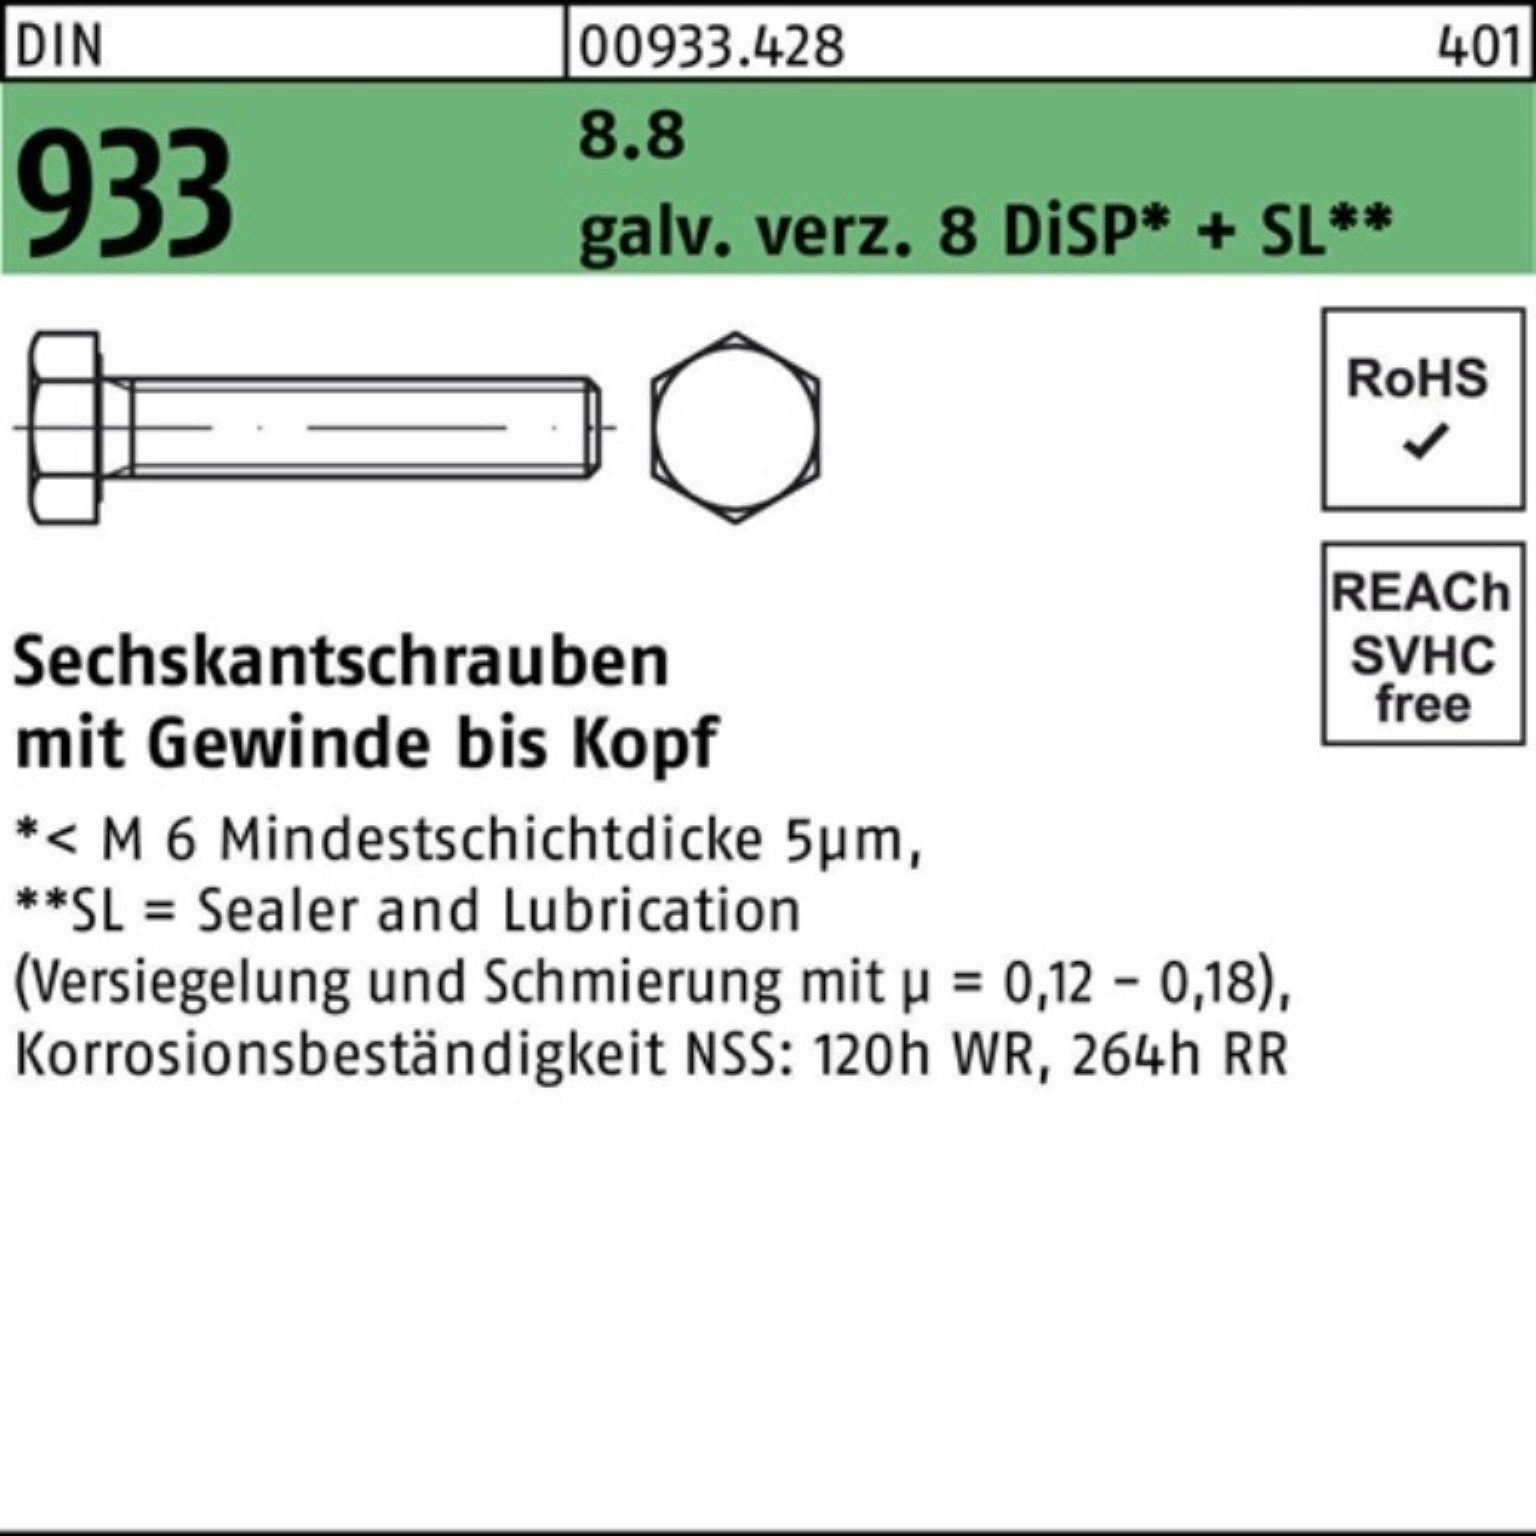 SL Pack DIN VG 8.8 Sechskantschraube M16x 20 gal 933 8 Sechskantschraube Zn 100er DiSP + Reyher